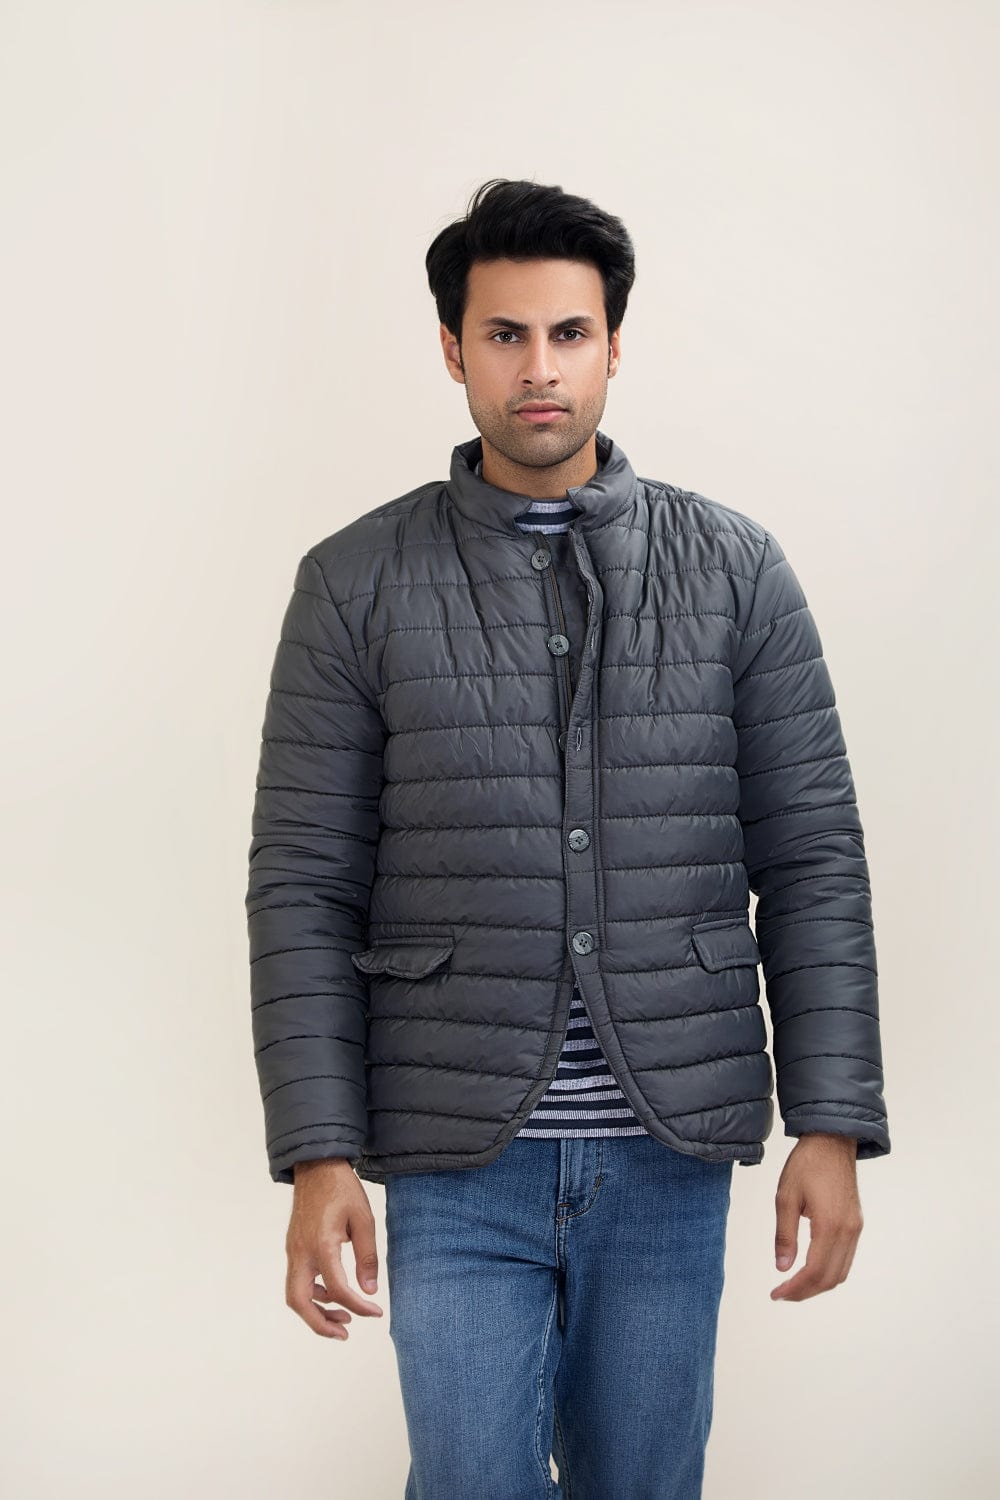 Hope Not Out by Shahid Afridi Men Jacket Coat Style Puffer Jacket